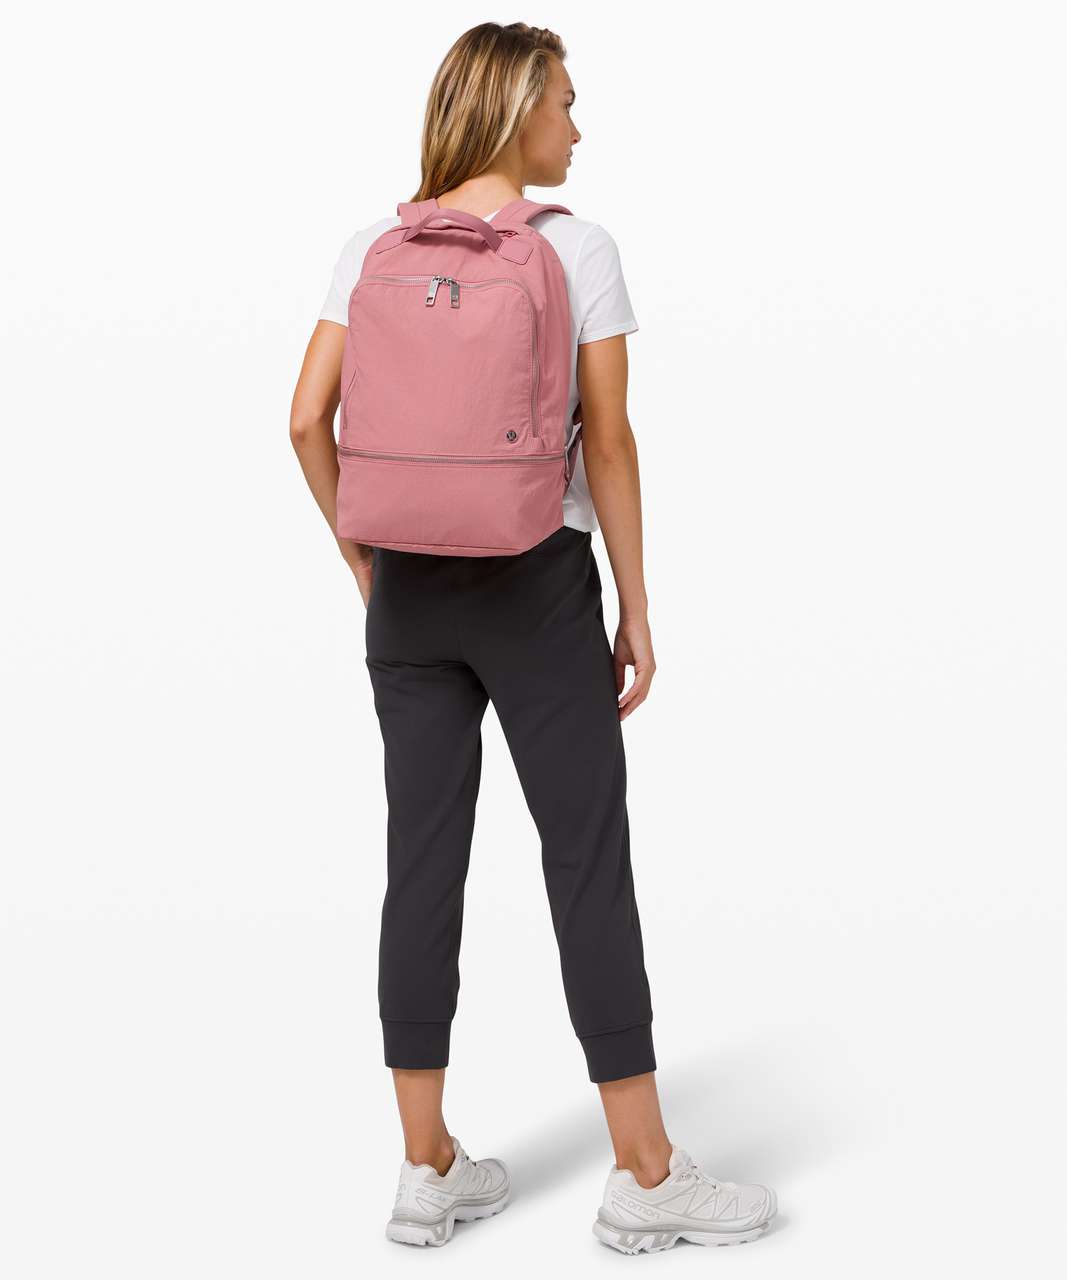 NEW Lululemon City Adventurer Mini Pink Pastel Backpack